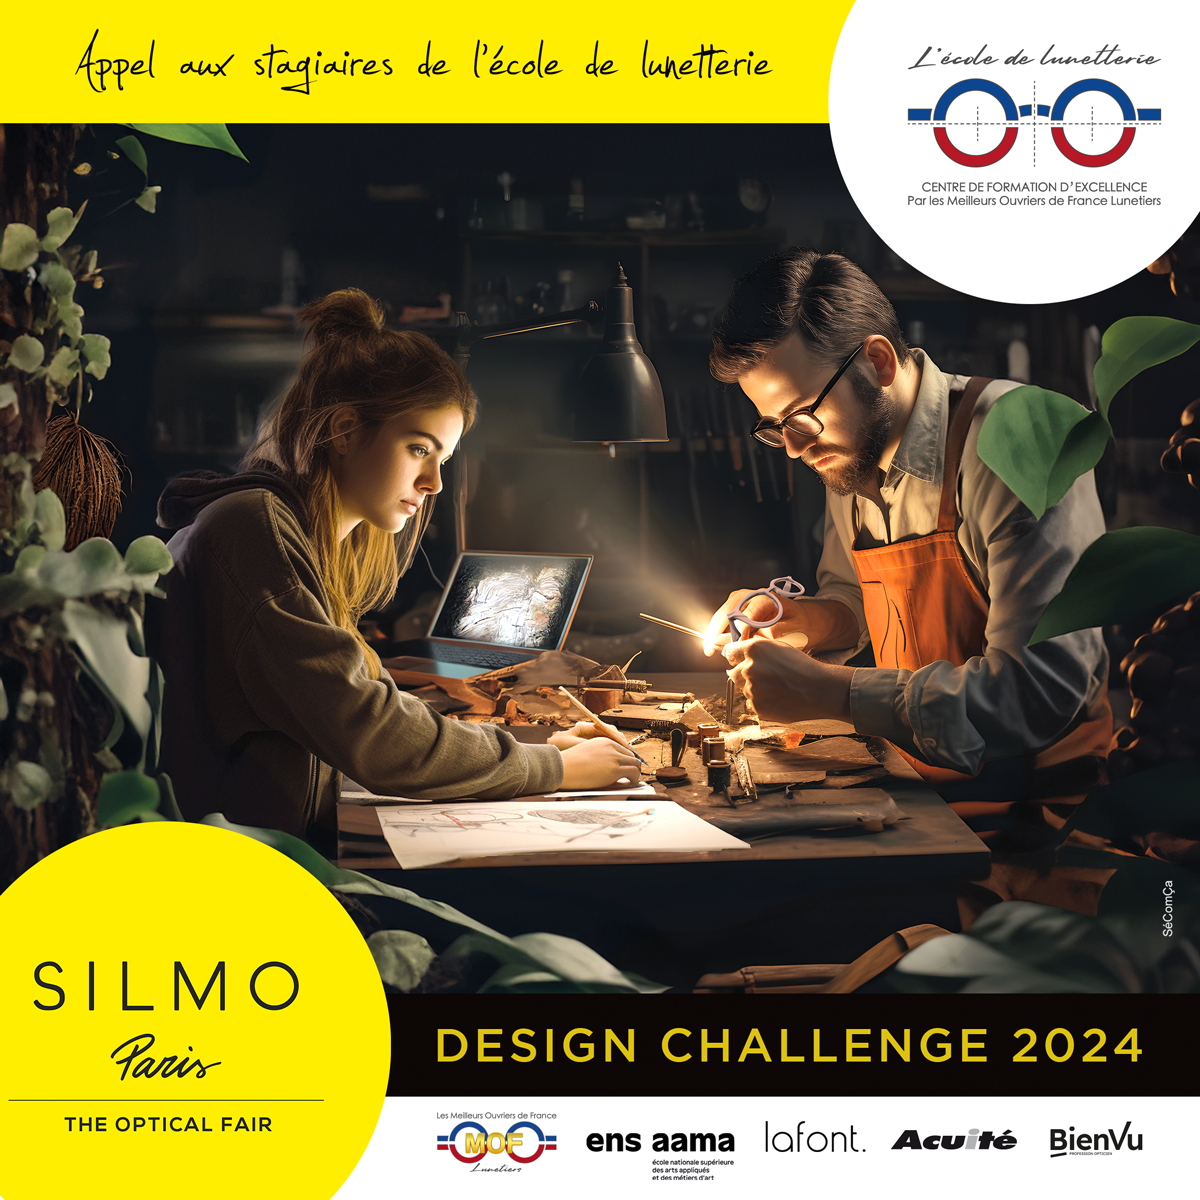 Design Challenge 2024